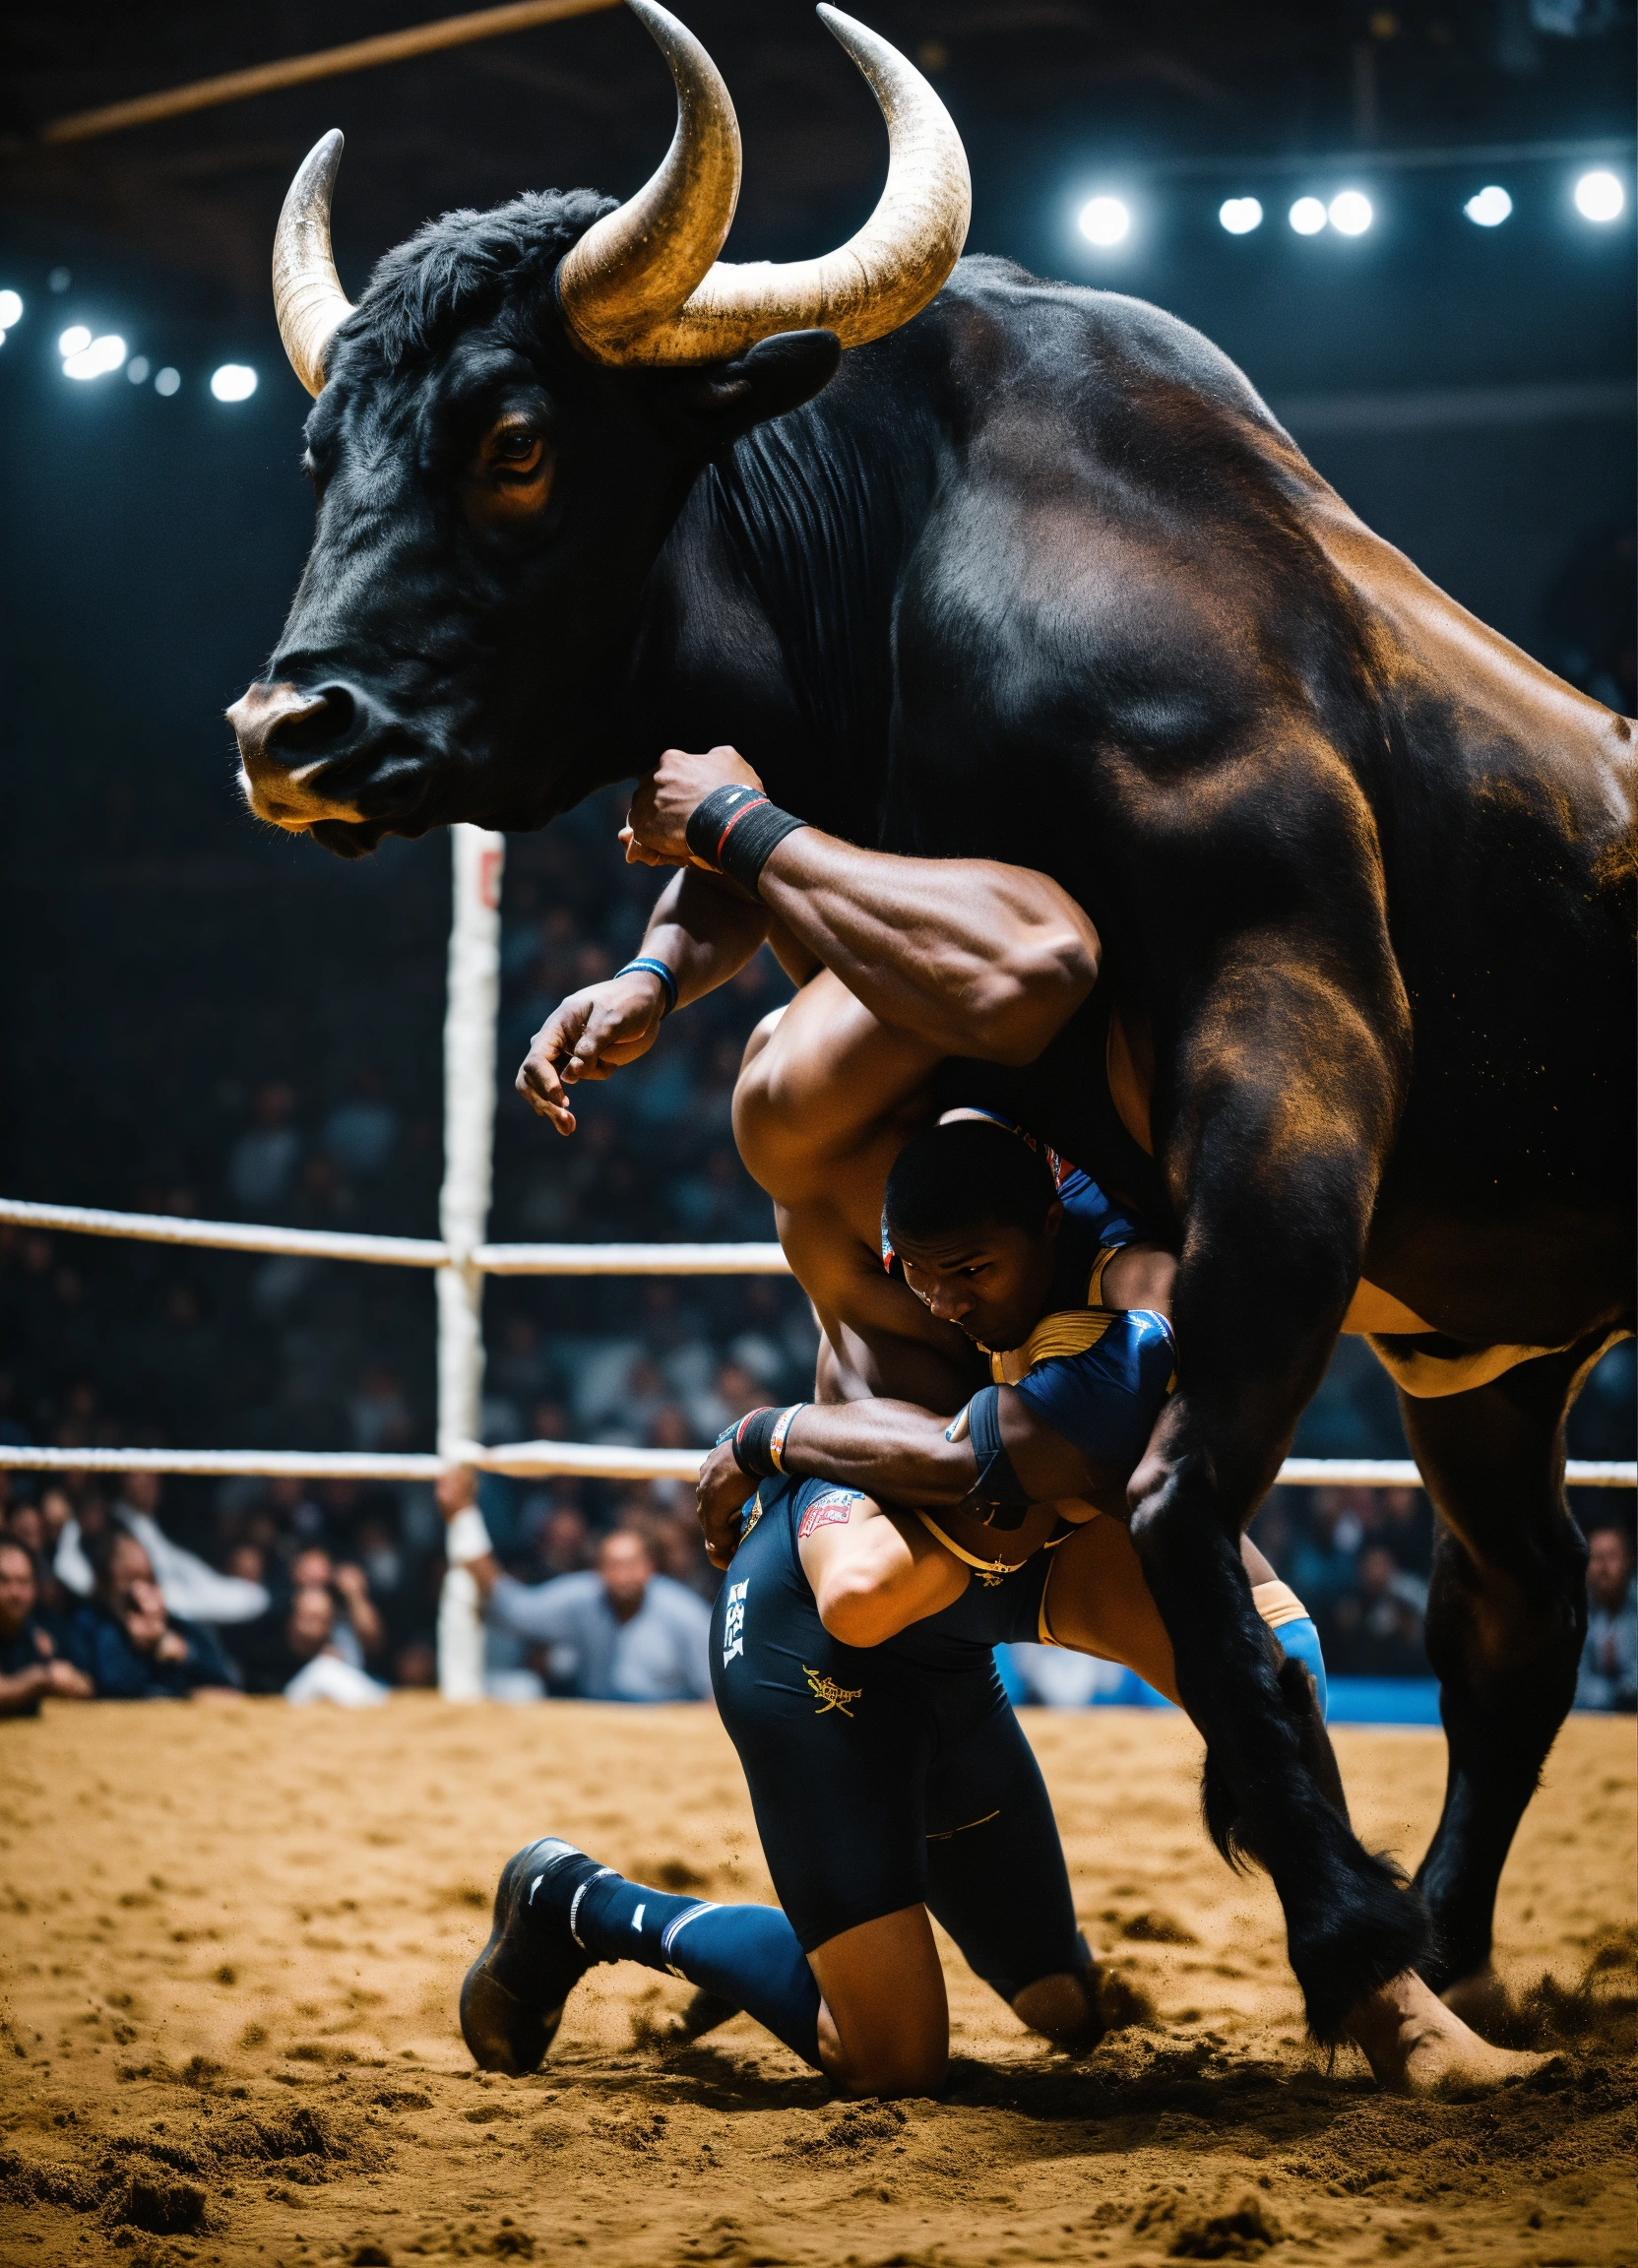 Lexica A Black Wrestler Grabbing A Bull By The Horns 4430